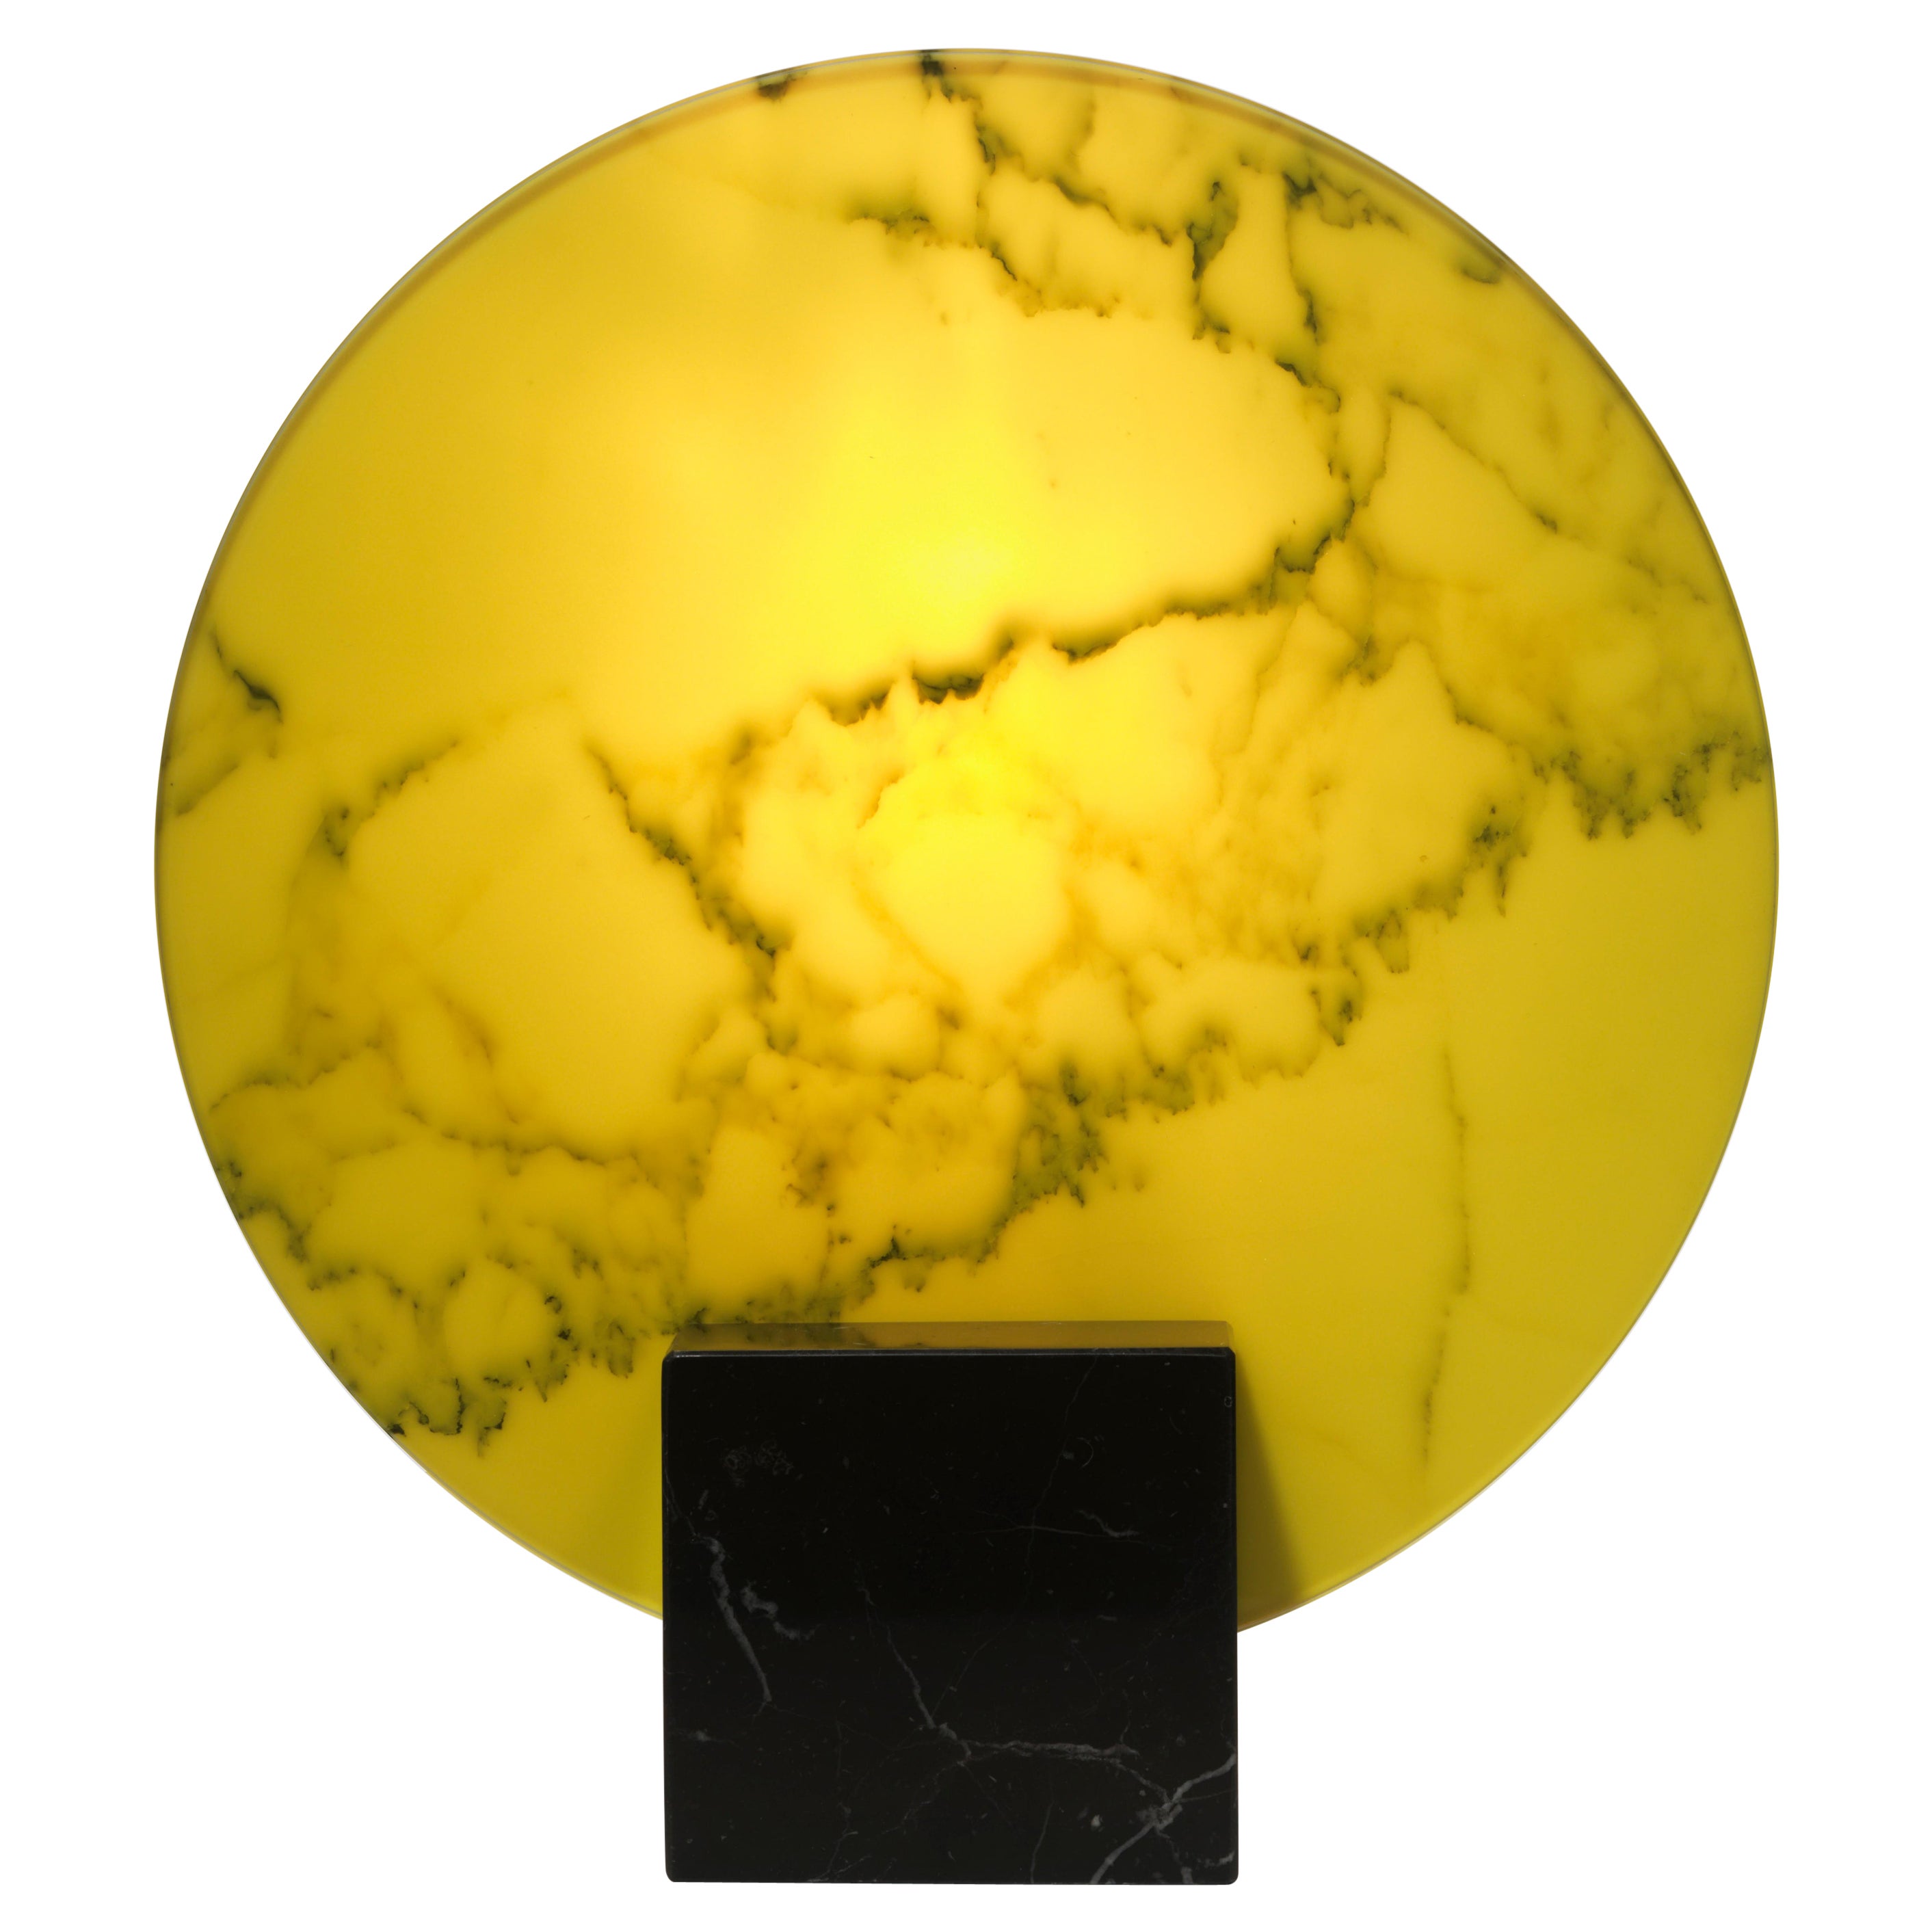 Lee Broom - Lampe de table en marbre acide